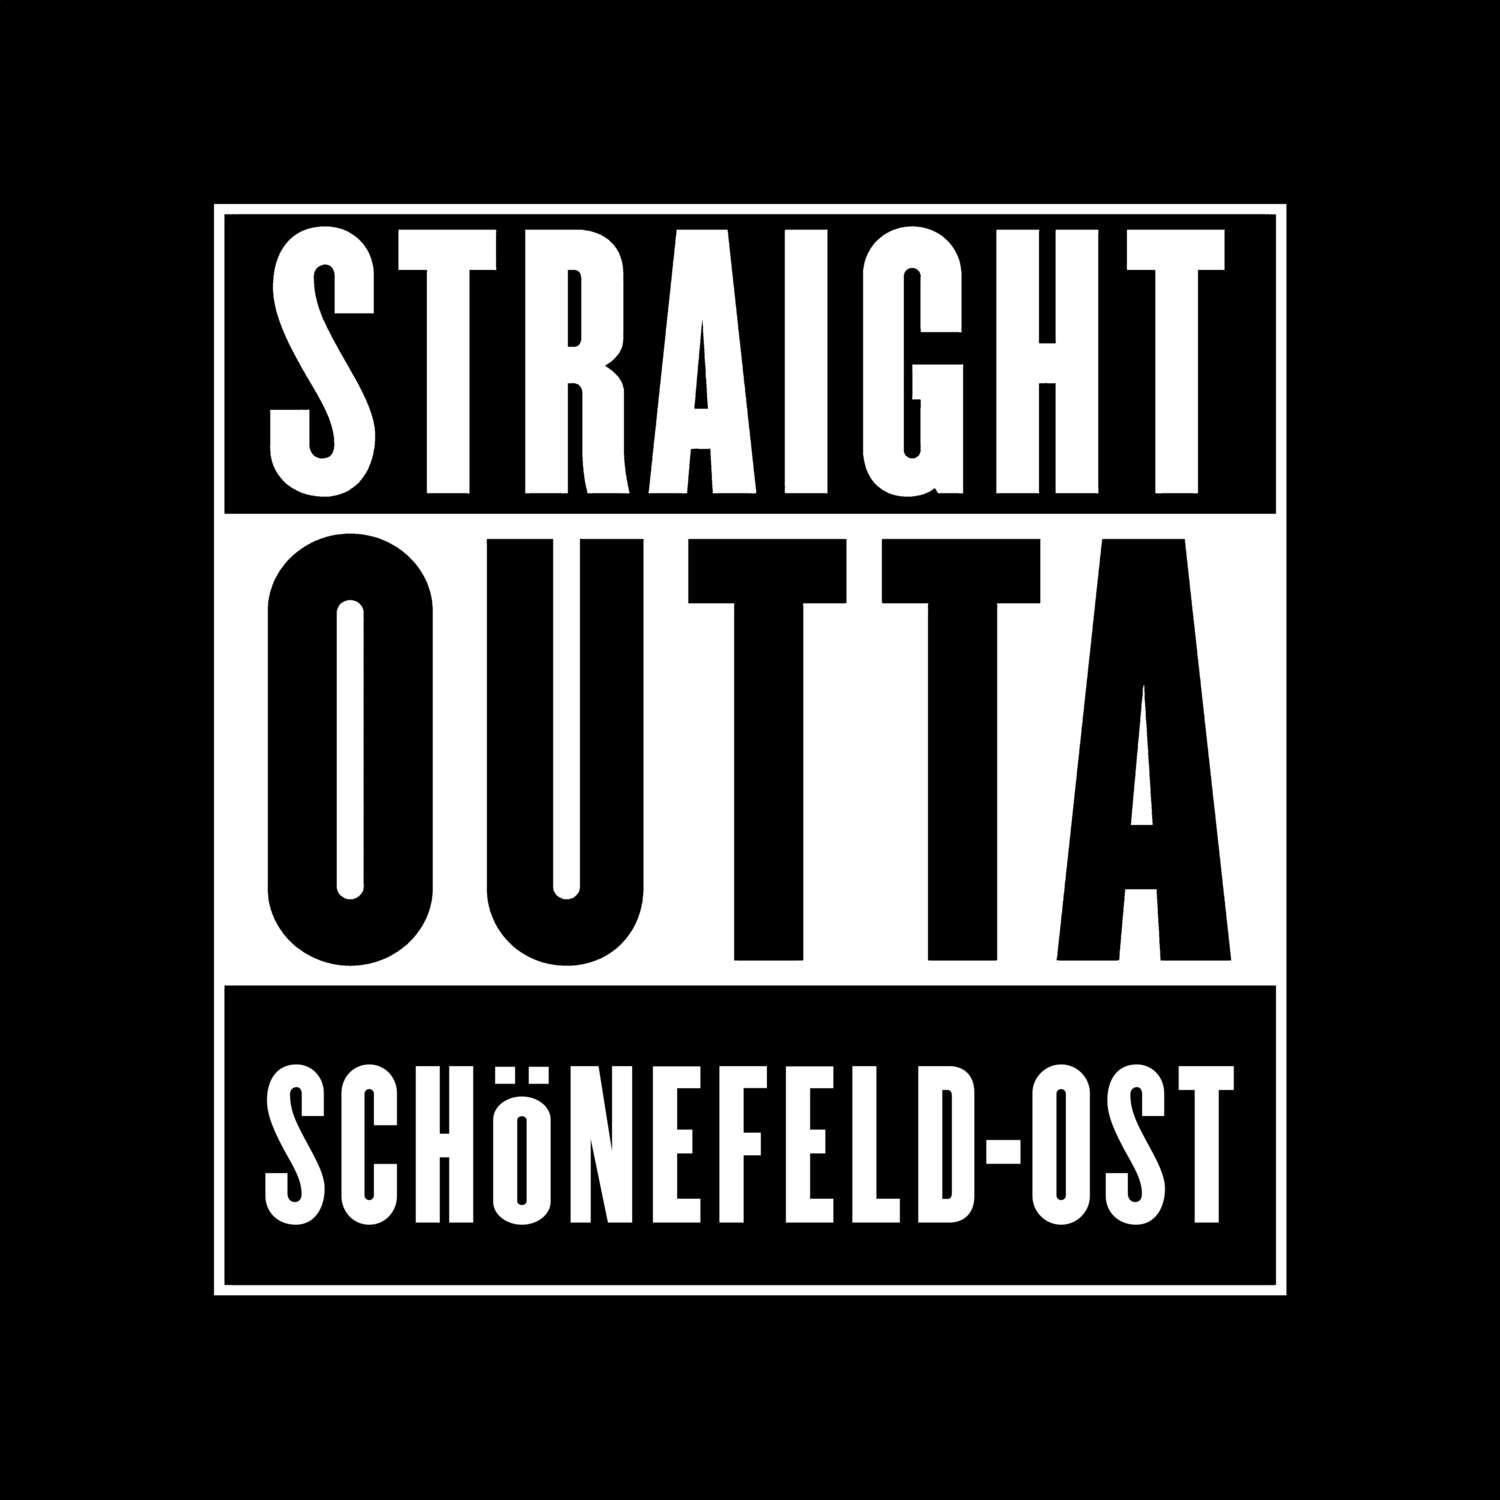 Schönefeld-Ost T-Shirt »Straight Outta«